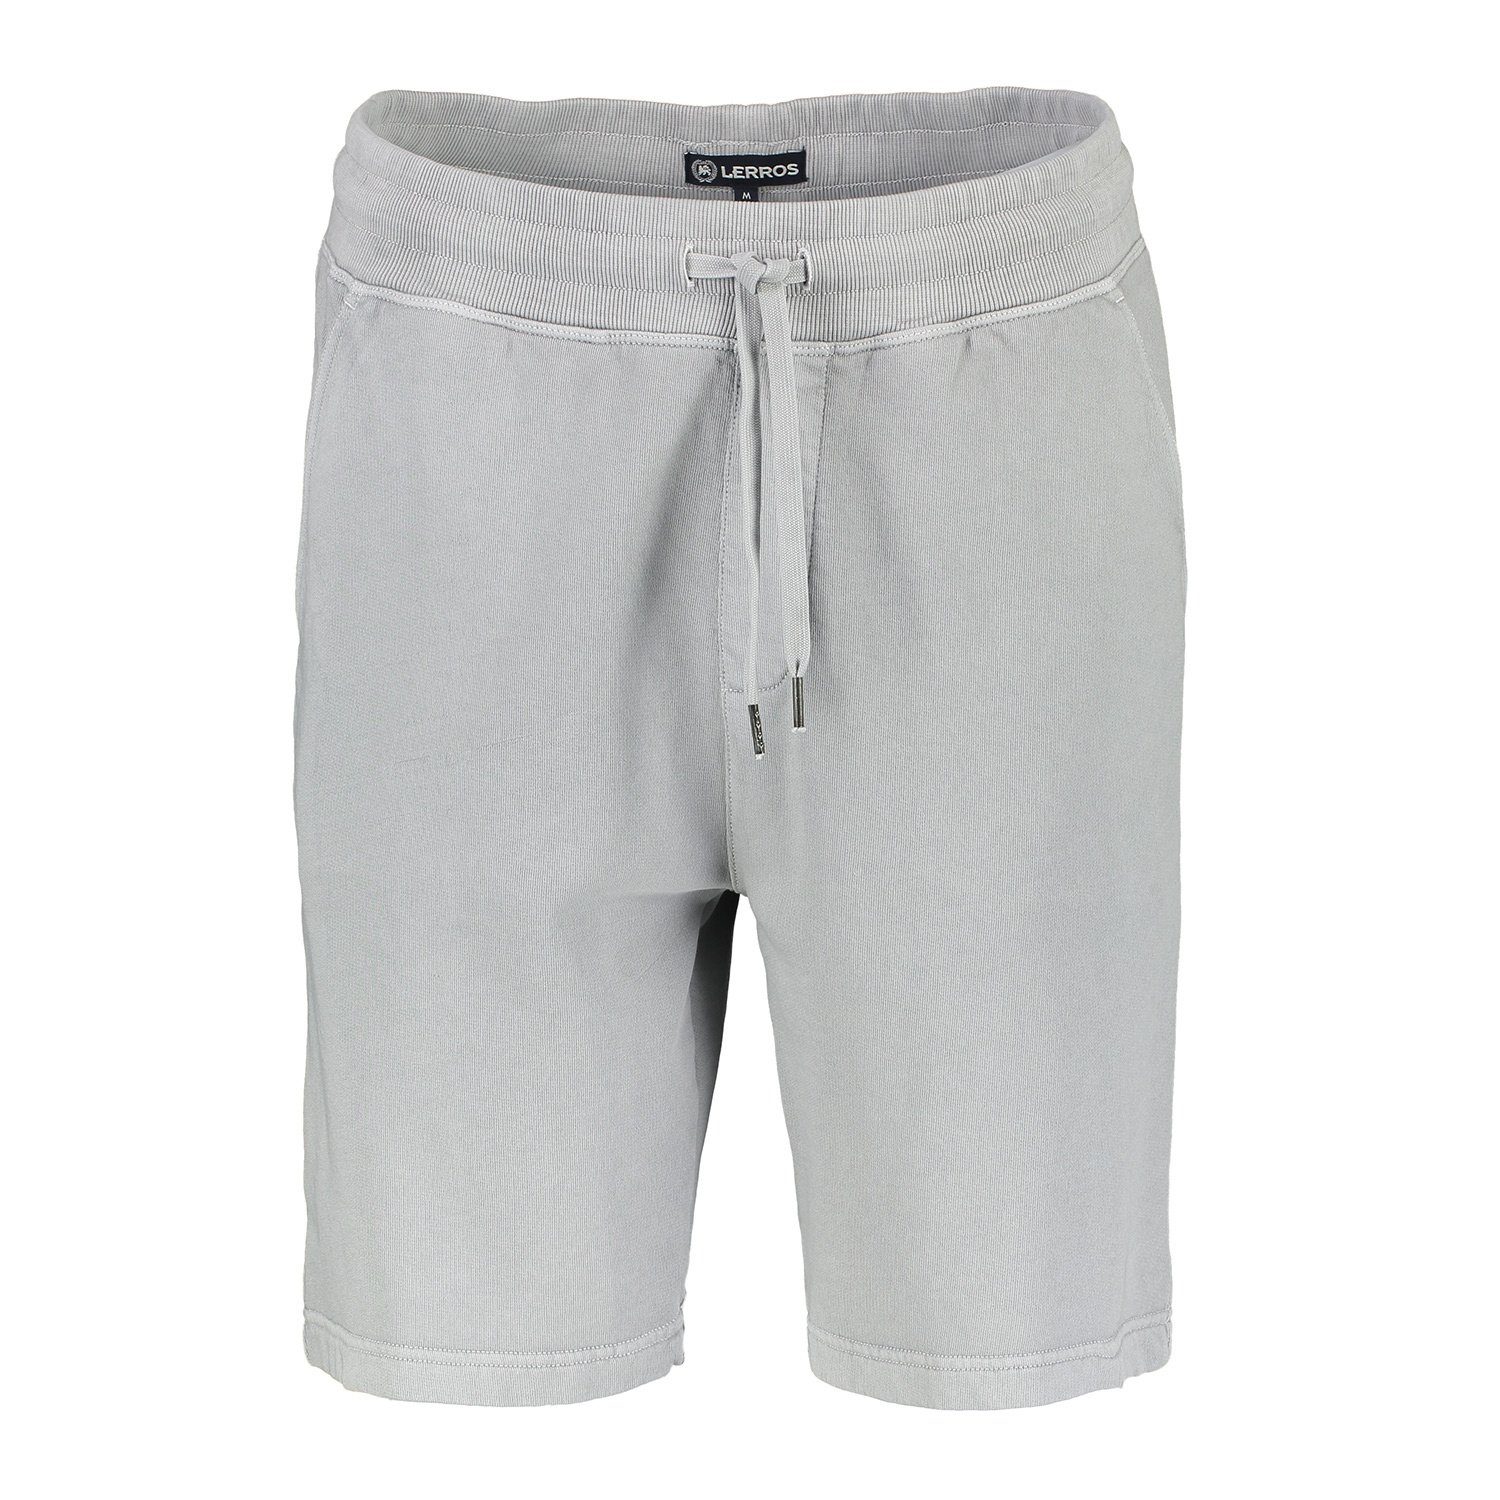 LERROS Shorts grey light Shorts